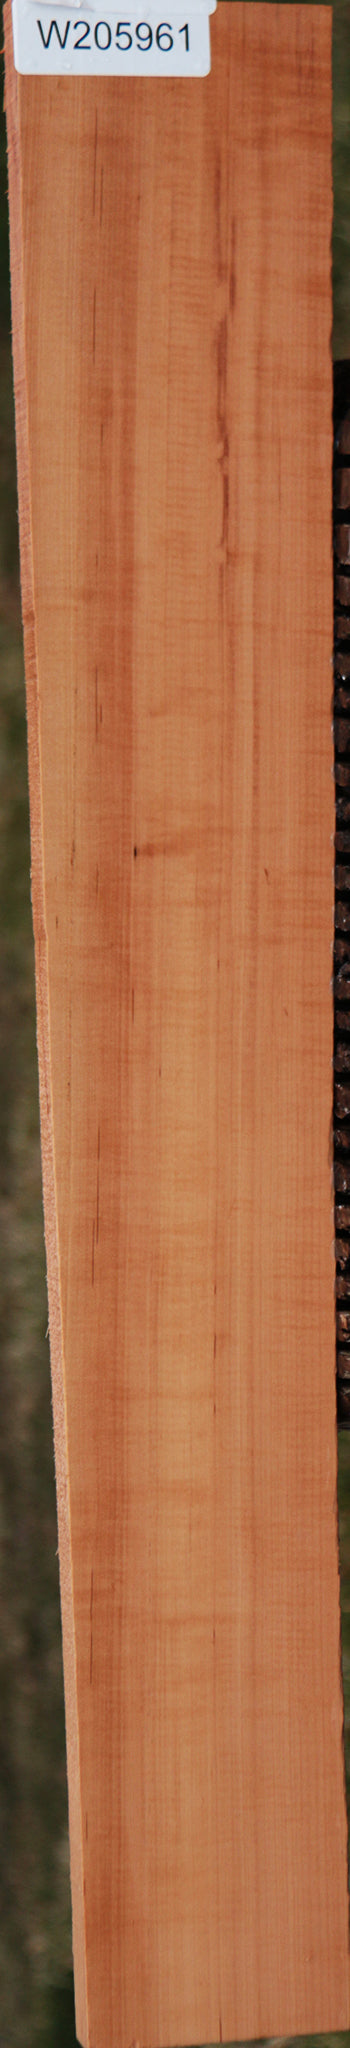 Swiss Pear Lumber